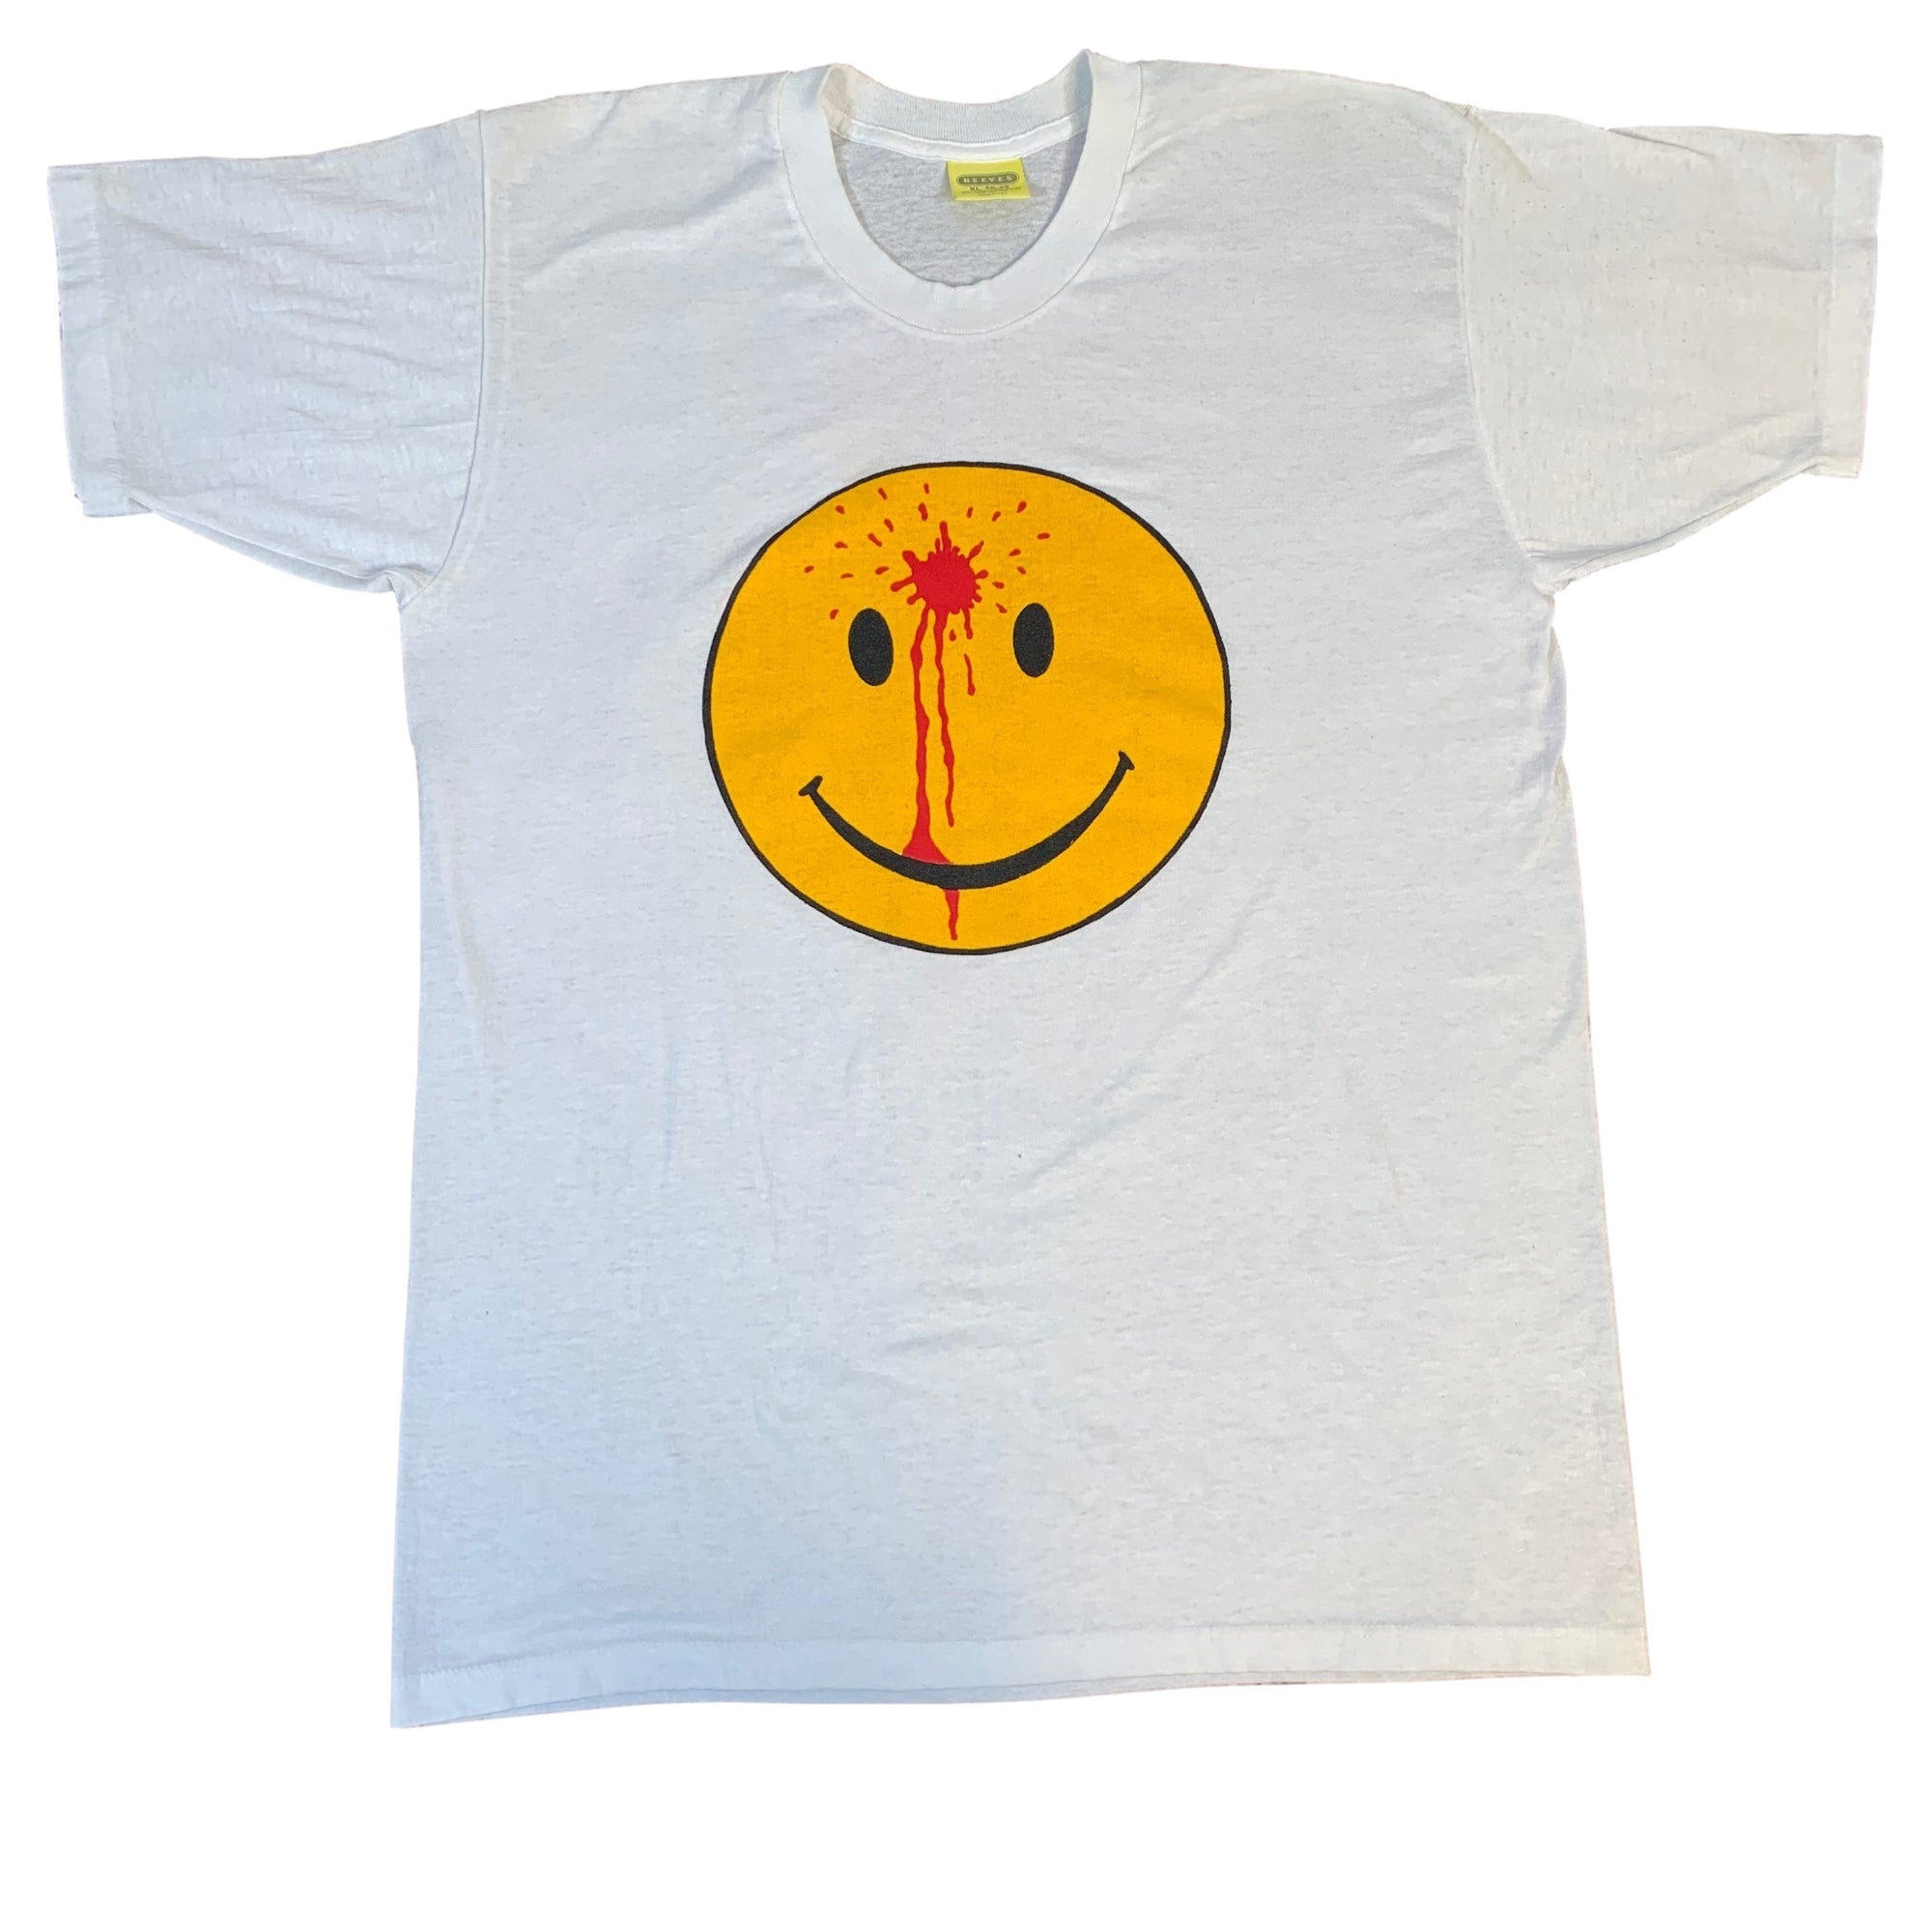 Vintage Watchmen "The Button" T-Shirt - jointcustodydc